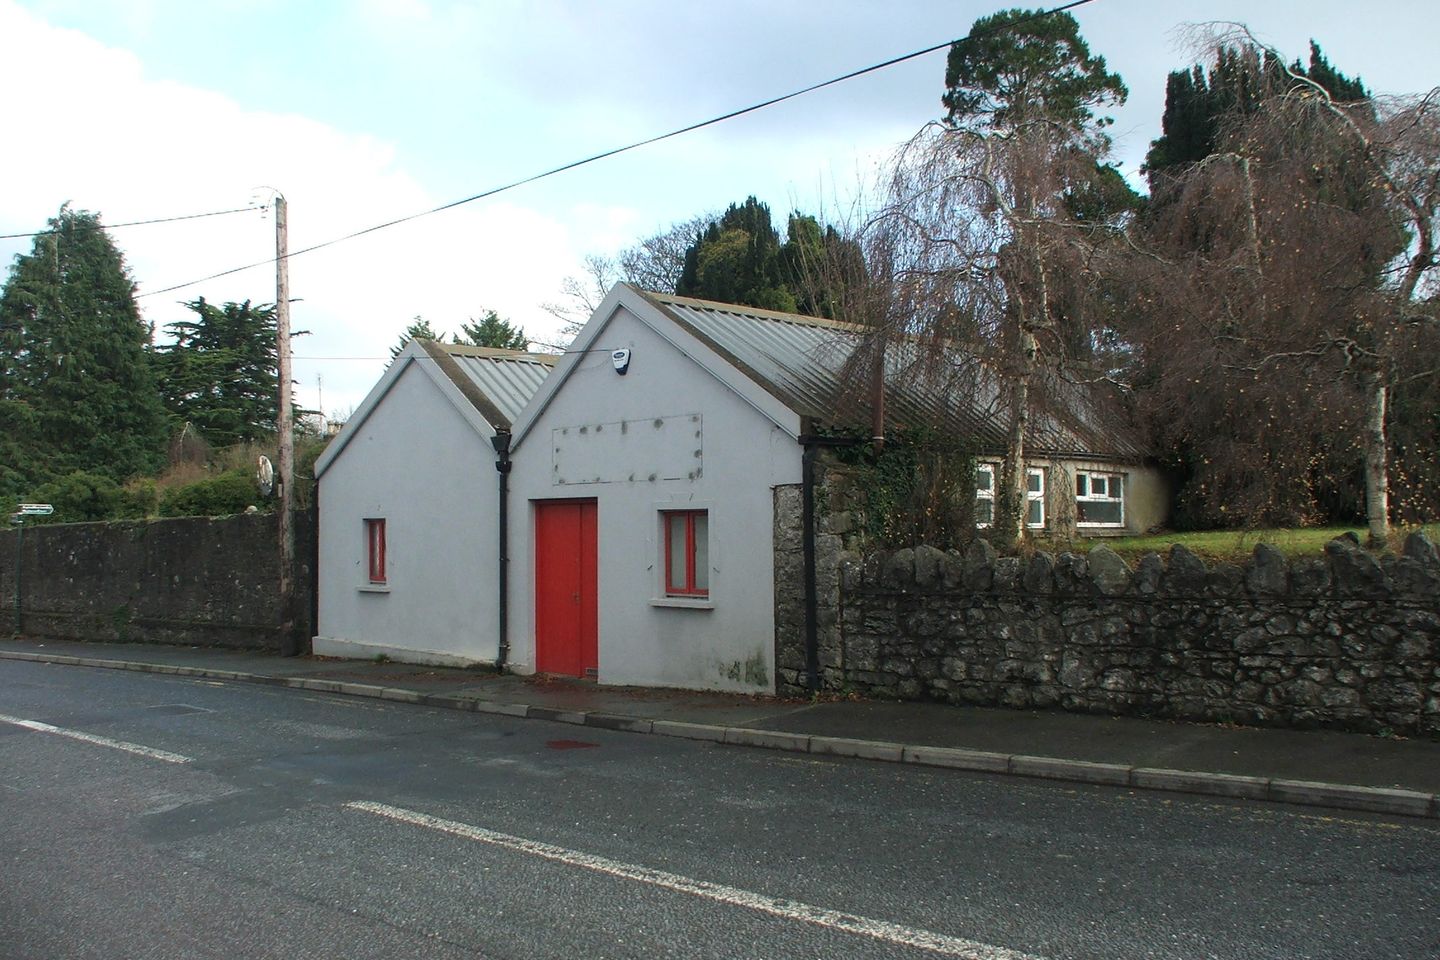 Magheross Road, Carrickmacross, Co. Monaghan